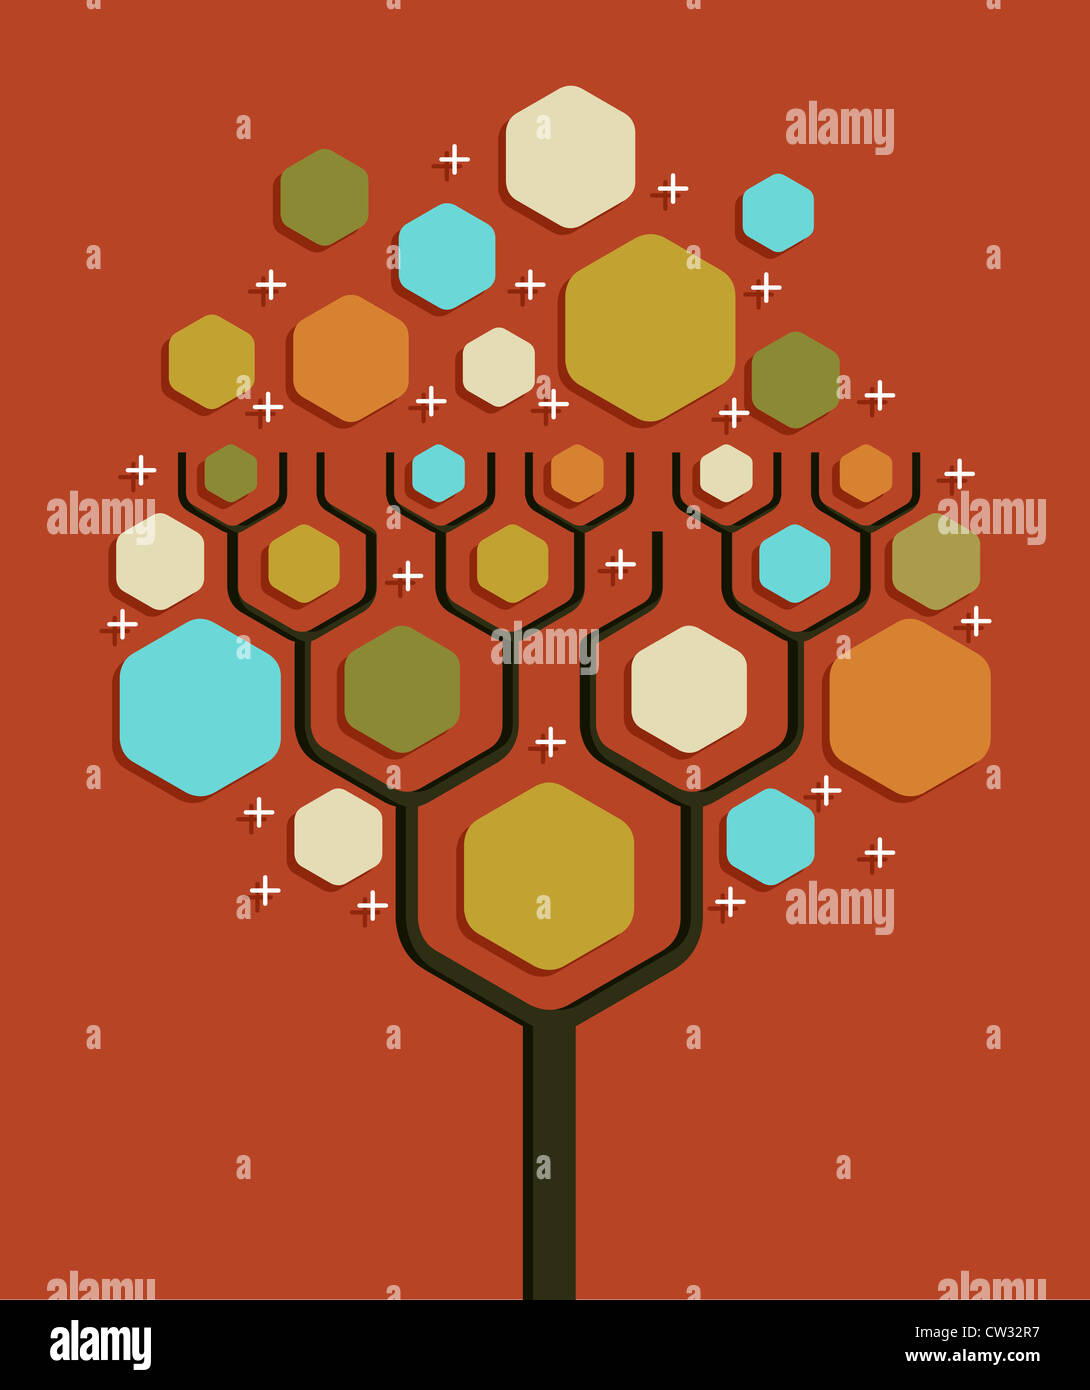 Family tree genealogy diagram stick figure Vector Image